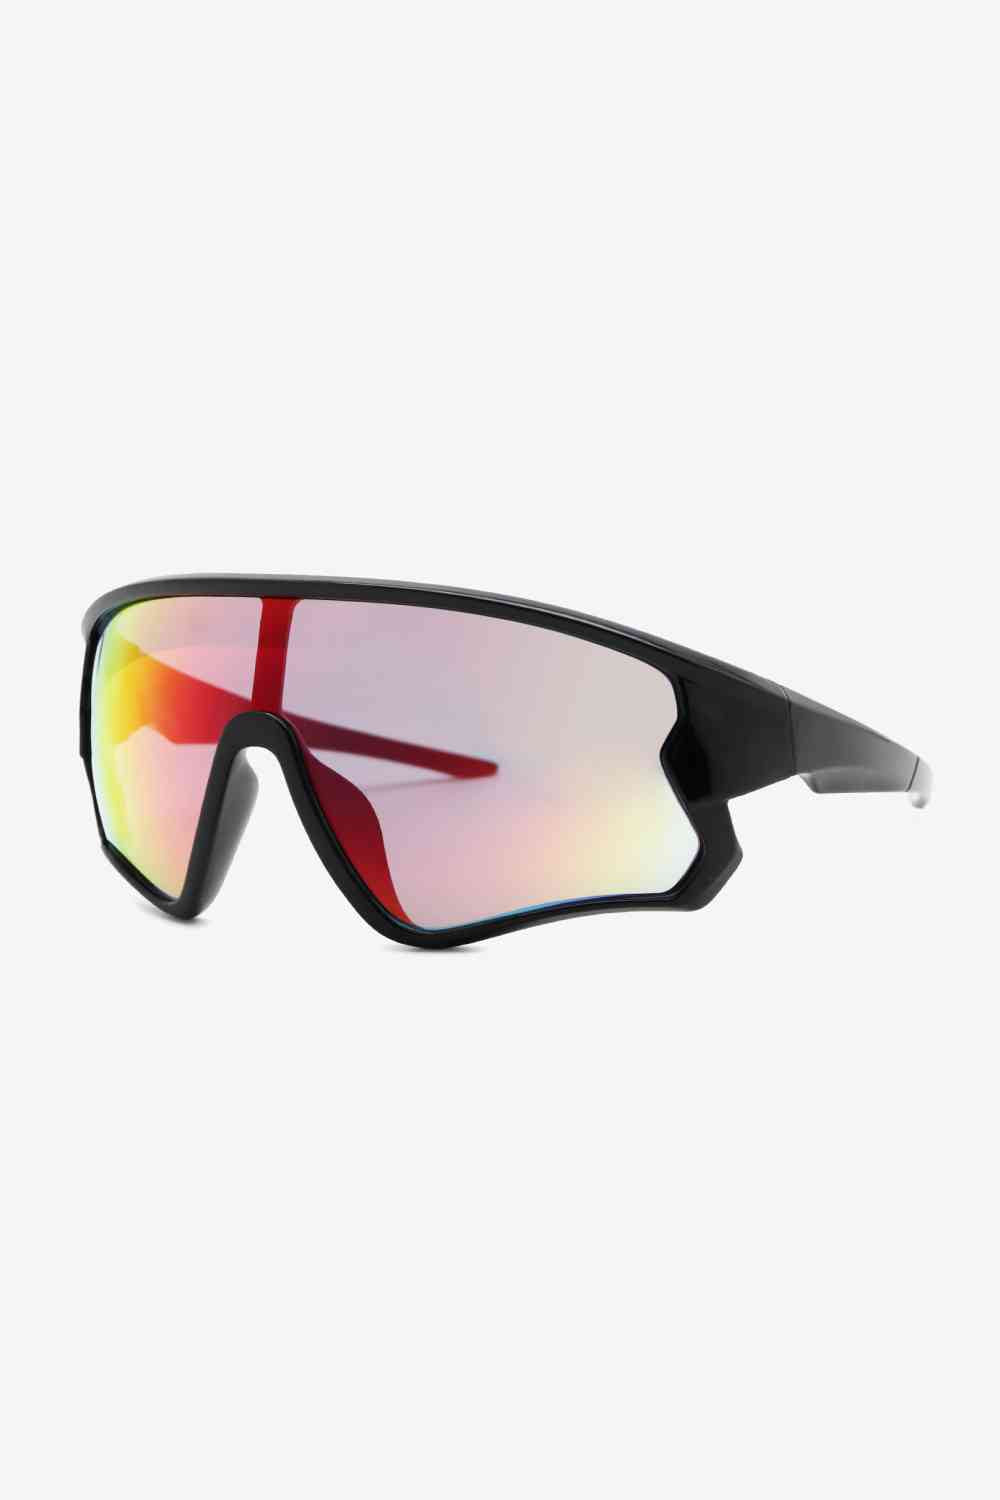 TEEK - Shade Shield Sunglasses EYEGLASSES TEEK Trend   